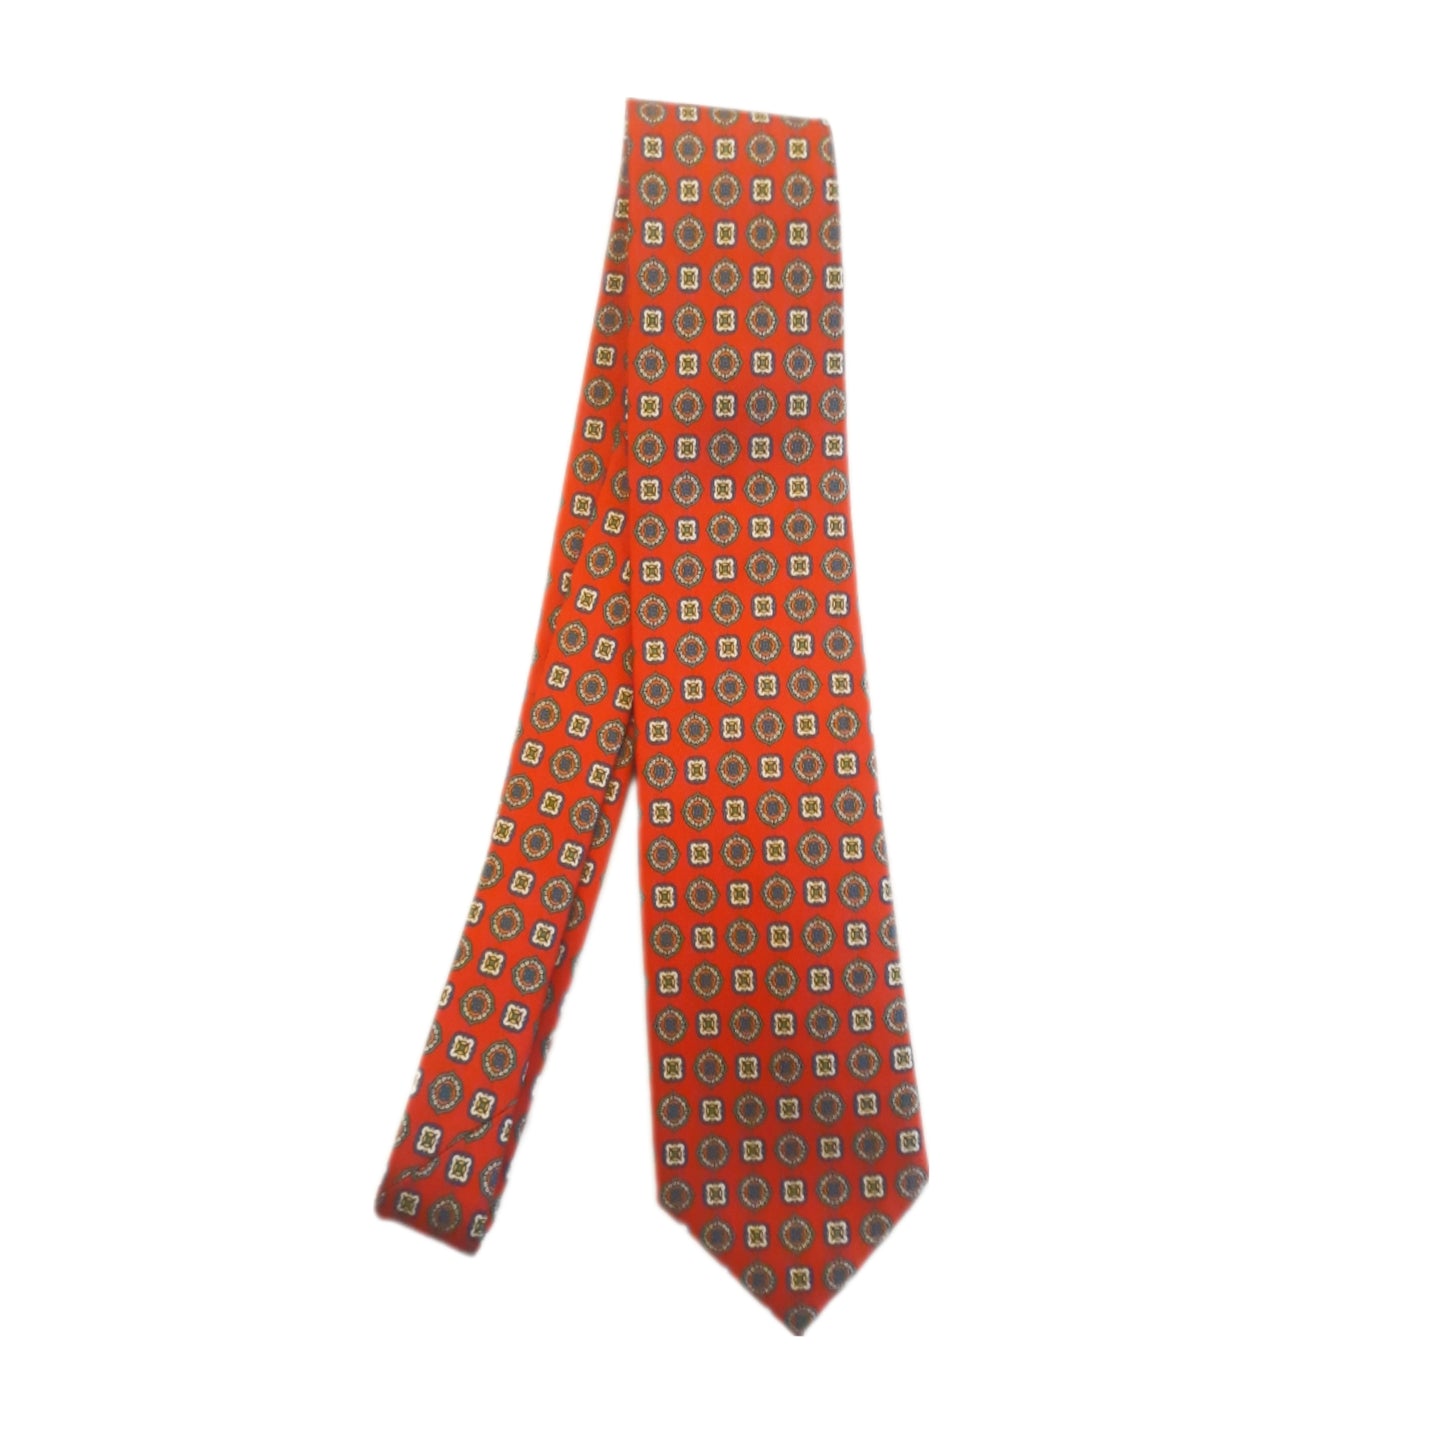 Cravatta rossa a fantasia 3 pieghe di pura seta fatta a mano